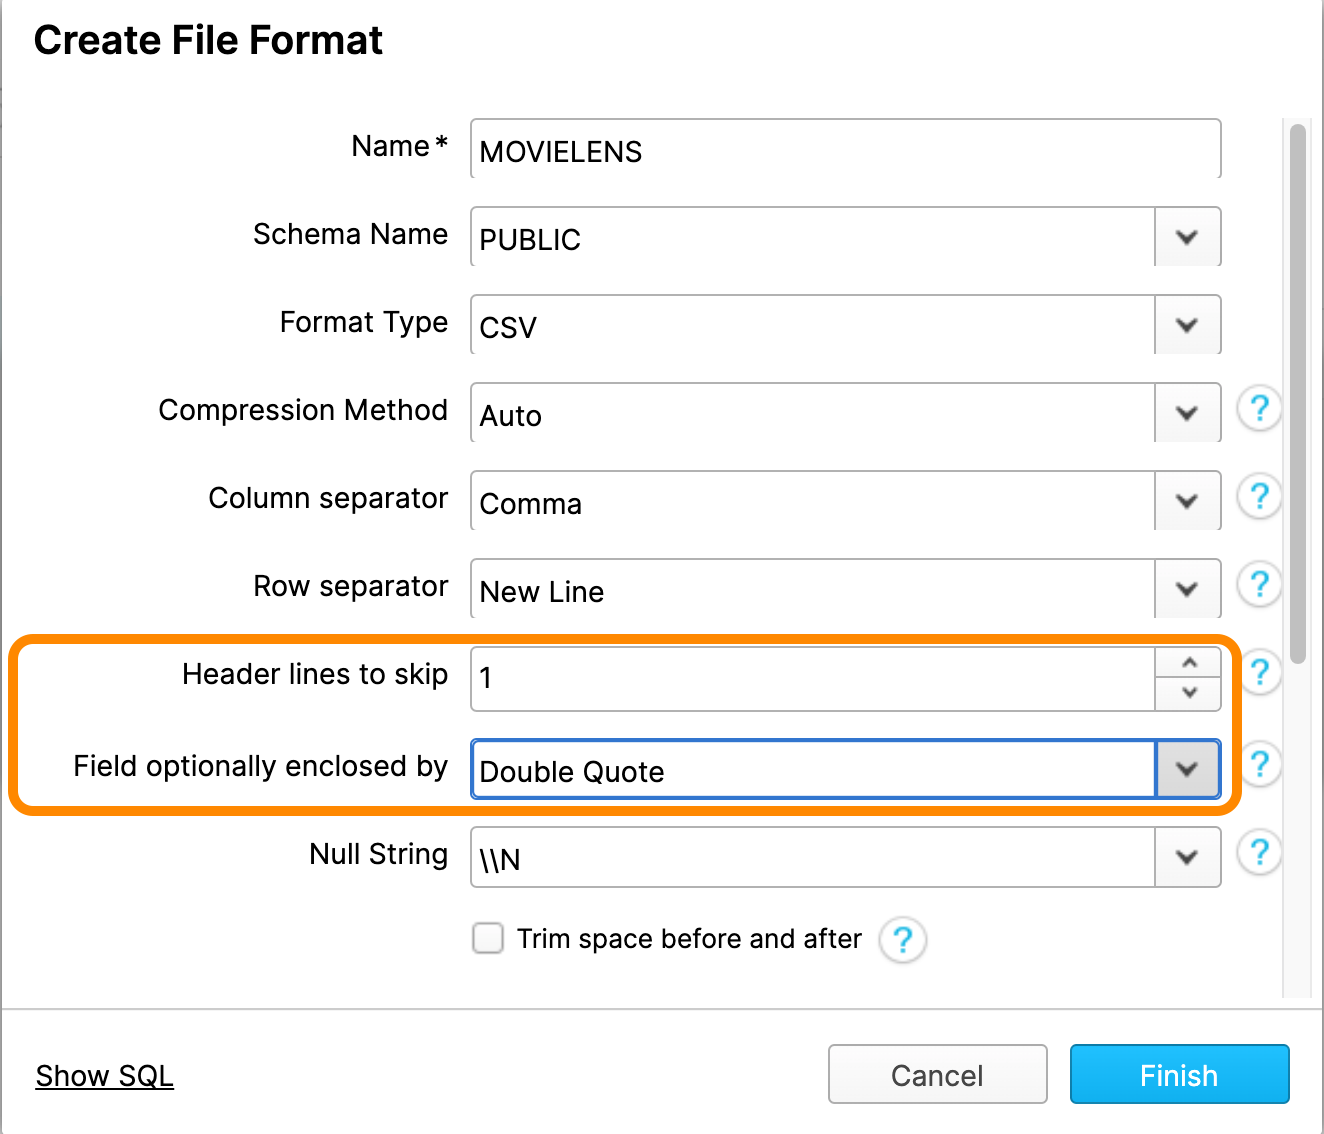 Create File Format